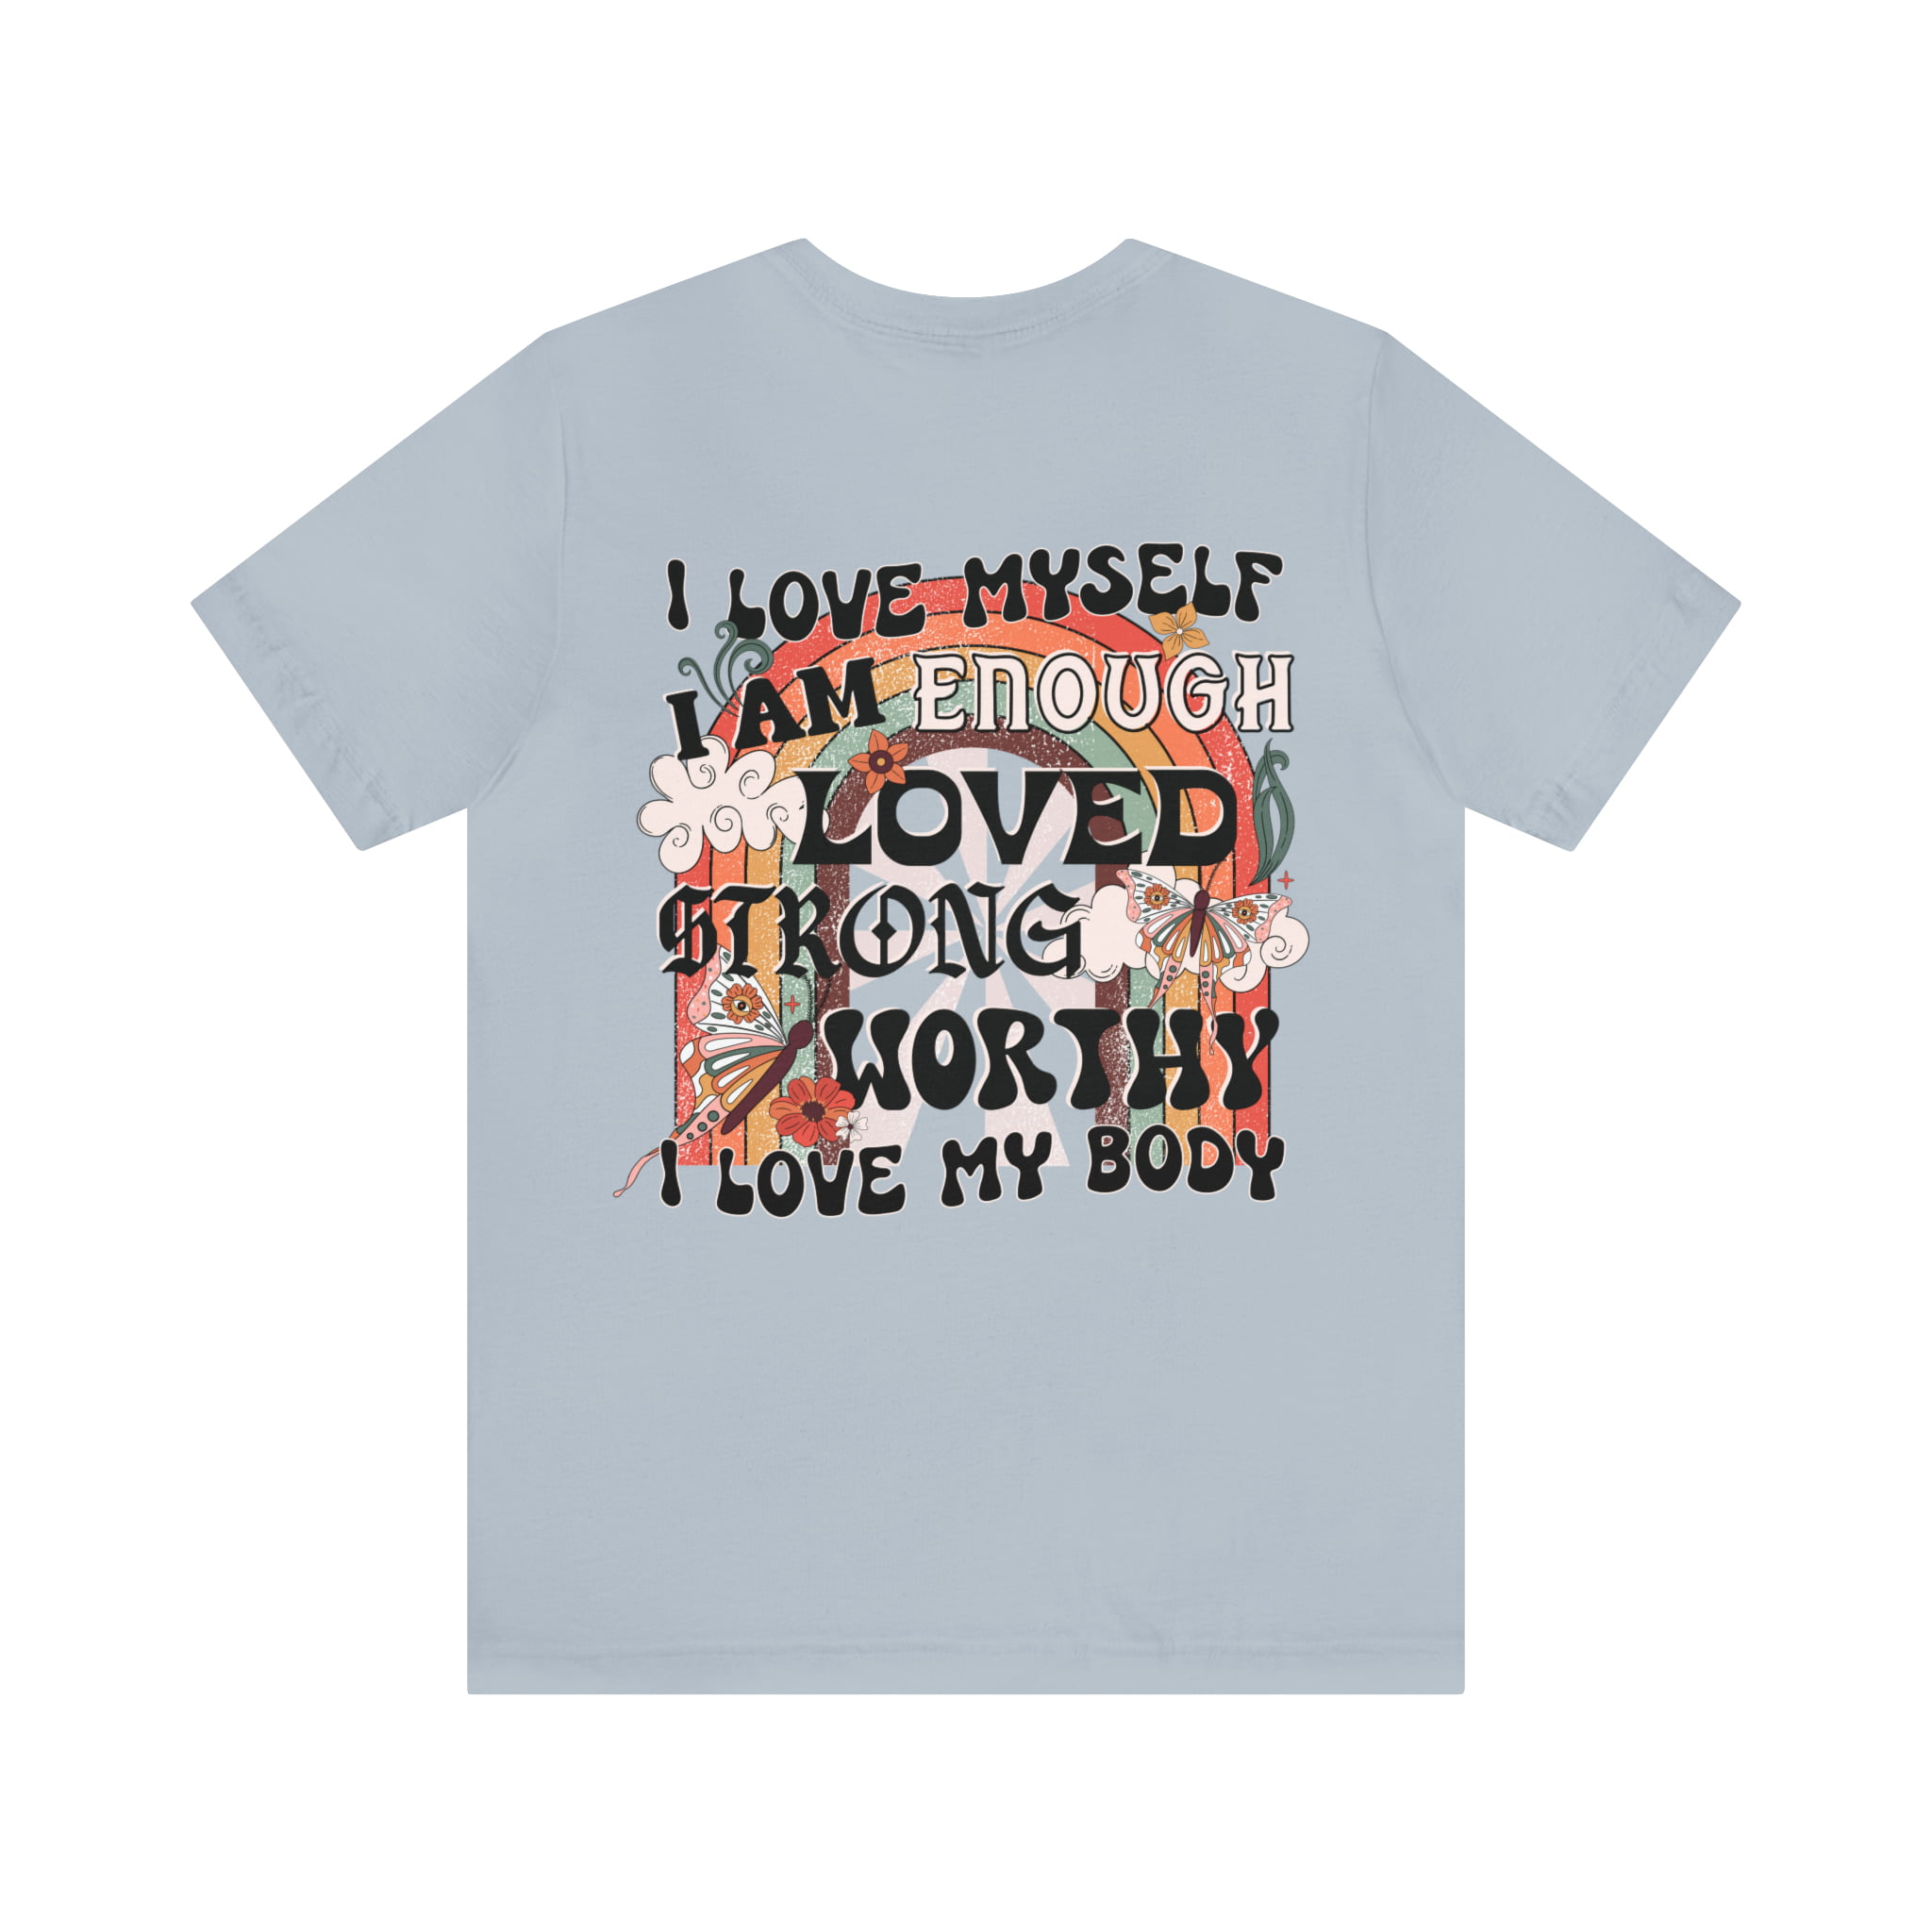 Shaded fantom arbejder I love myself enough, self love, gender-neutral t-shirt - Walmart.com